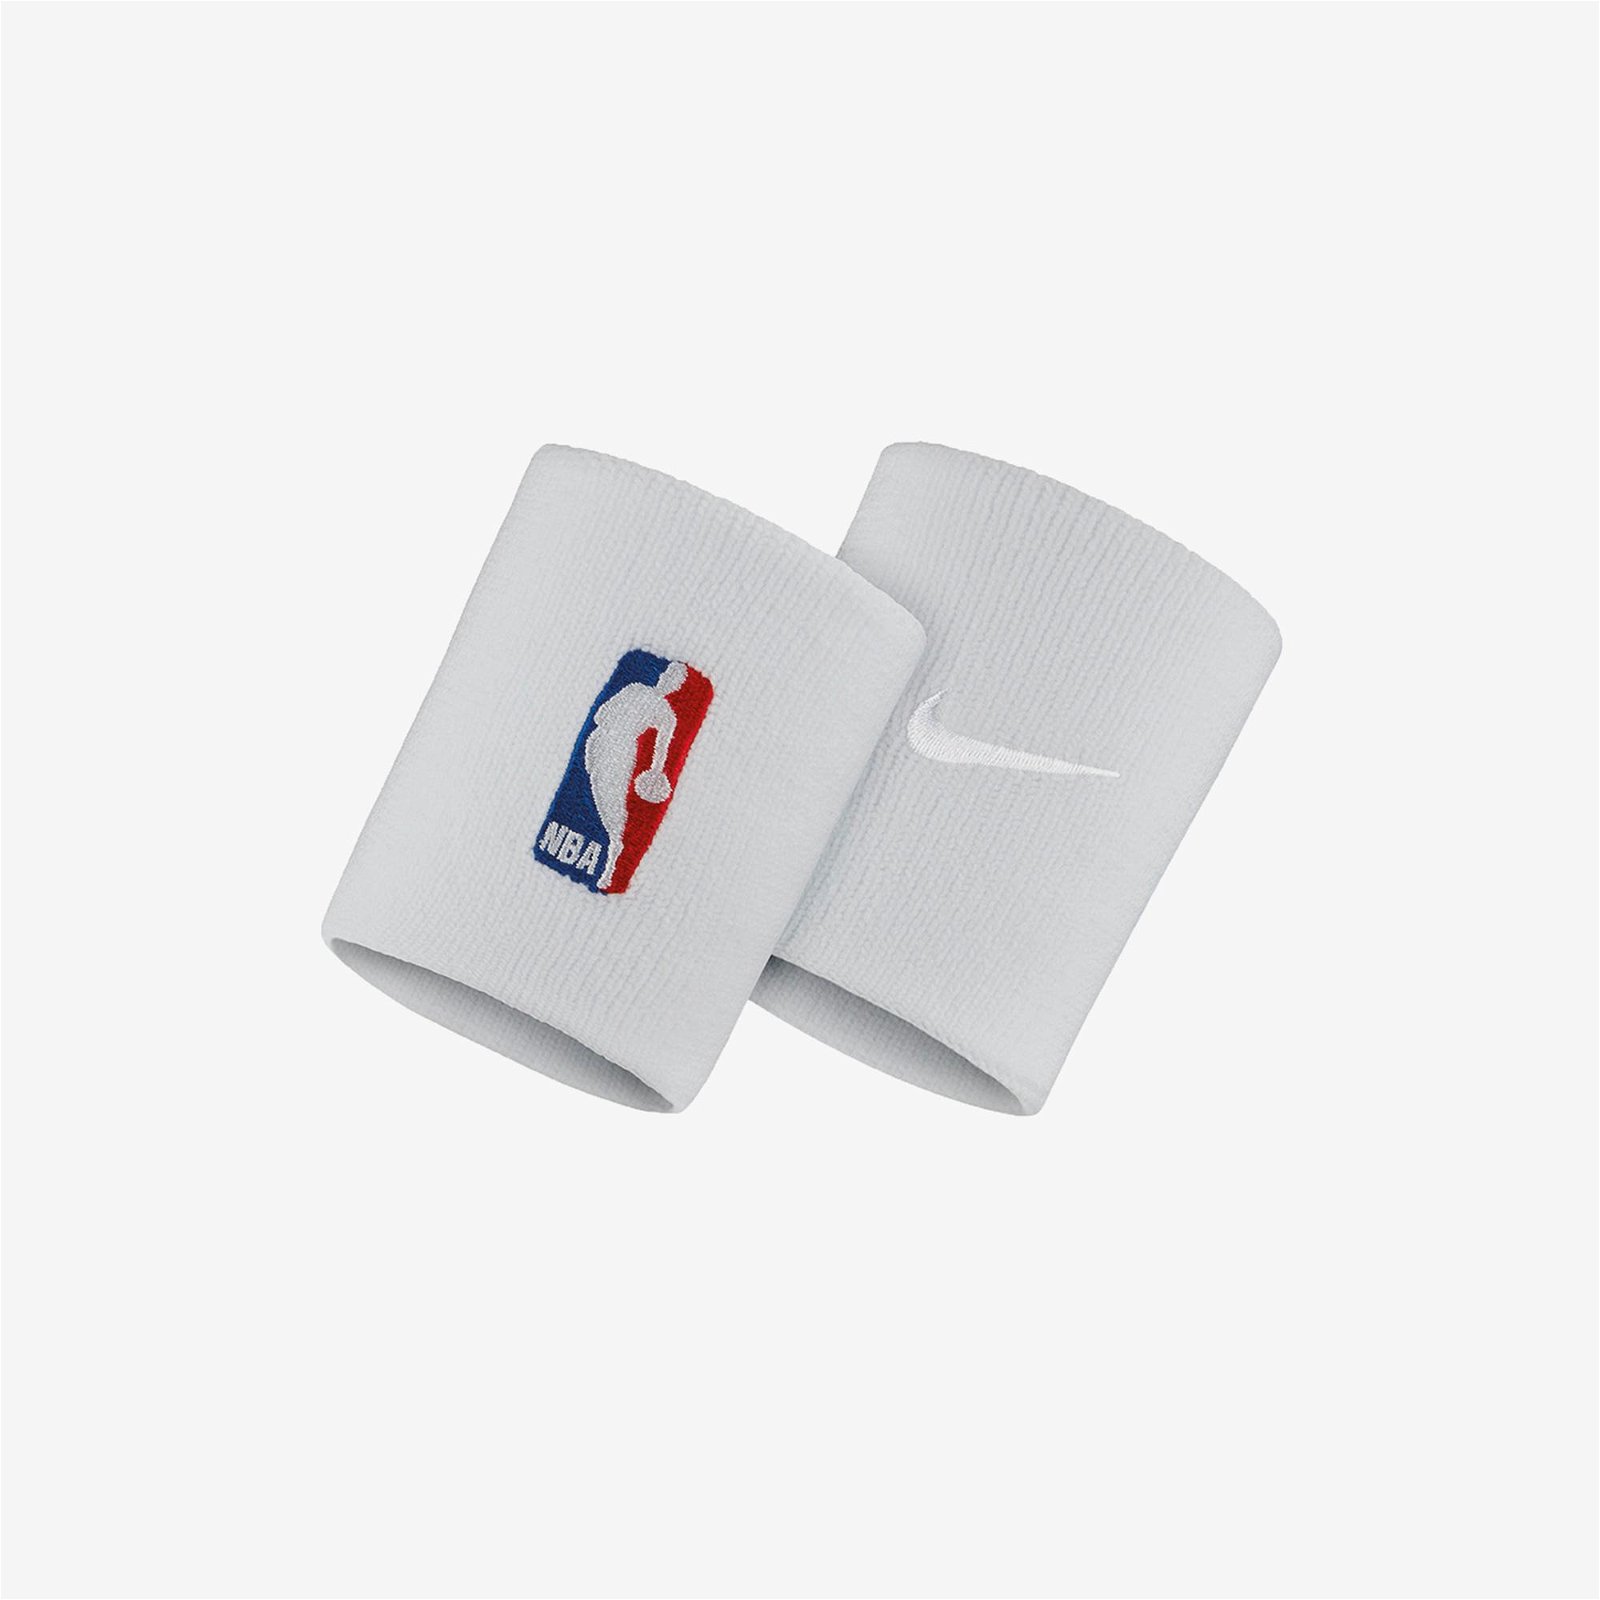 Nike NBA White Unisex Beyaz Bileklik